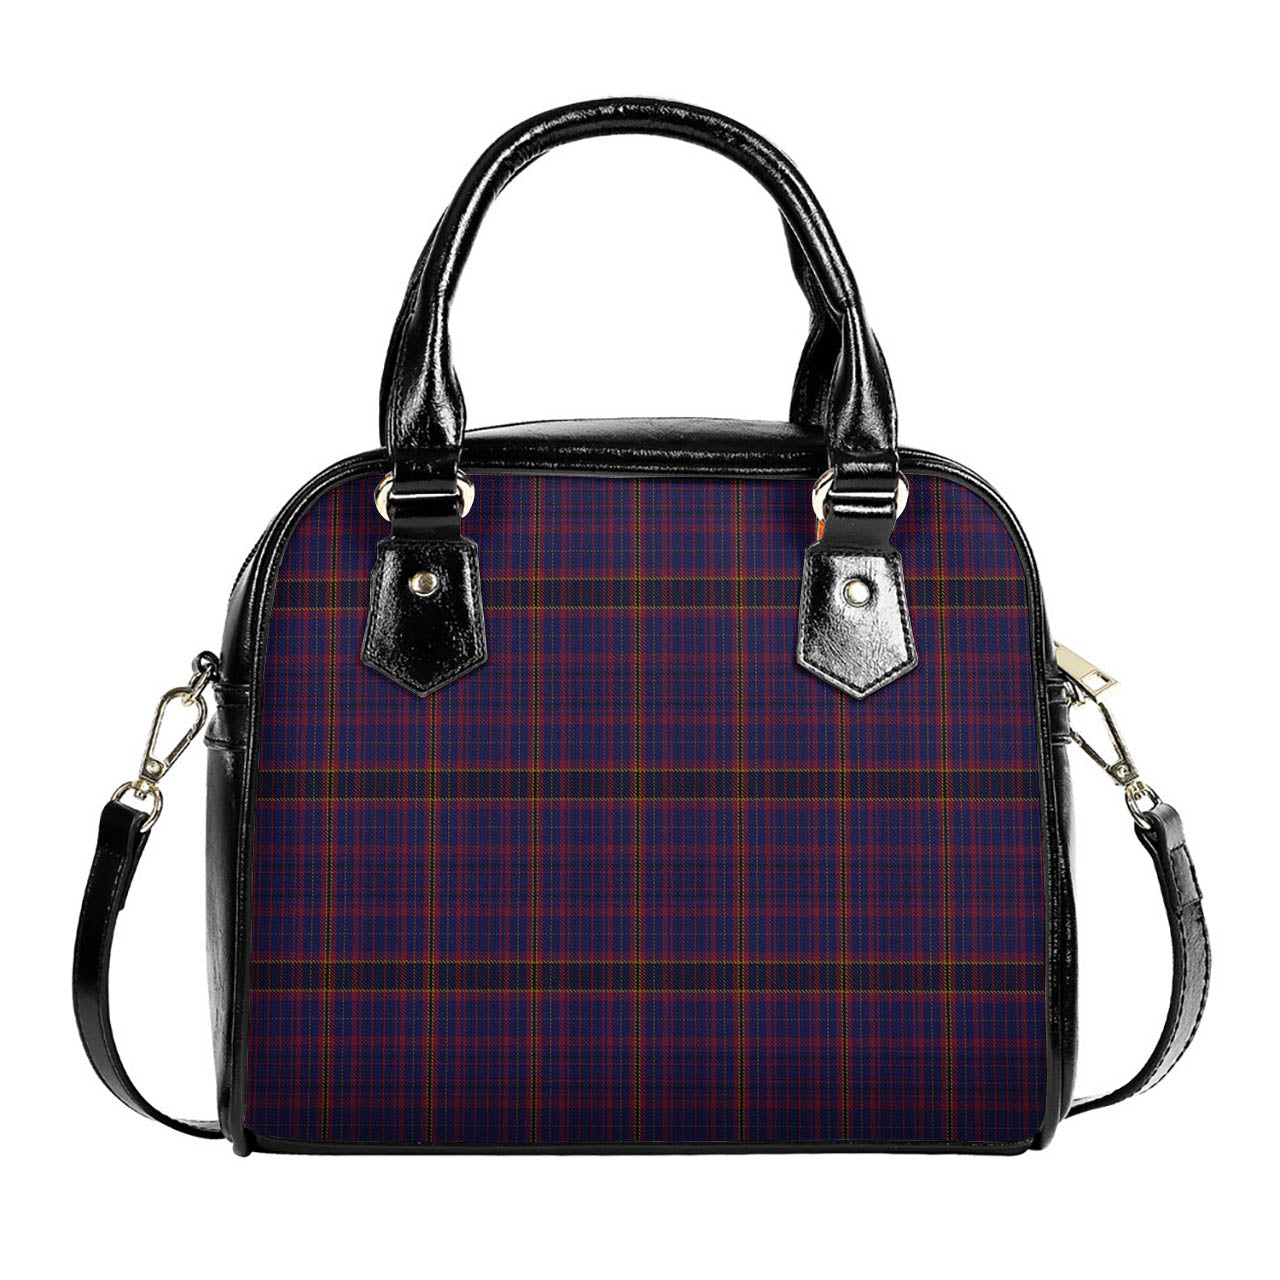 James of Wales Tartan Shoulder Handbags One Size 6*25*22 cm - Tartanvibesclothing